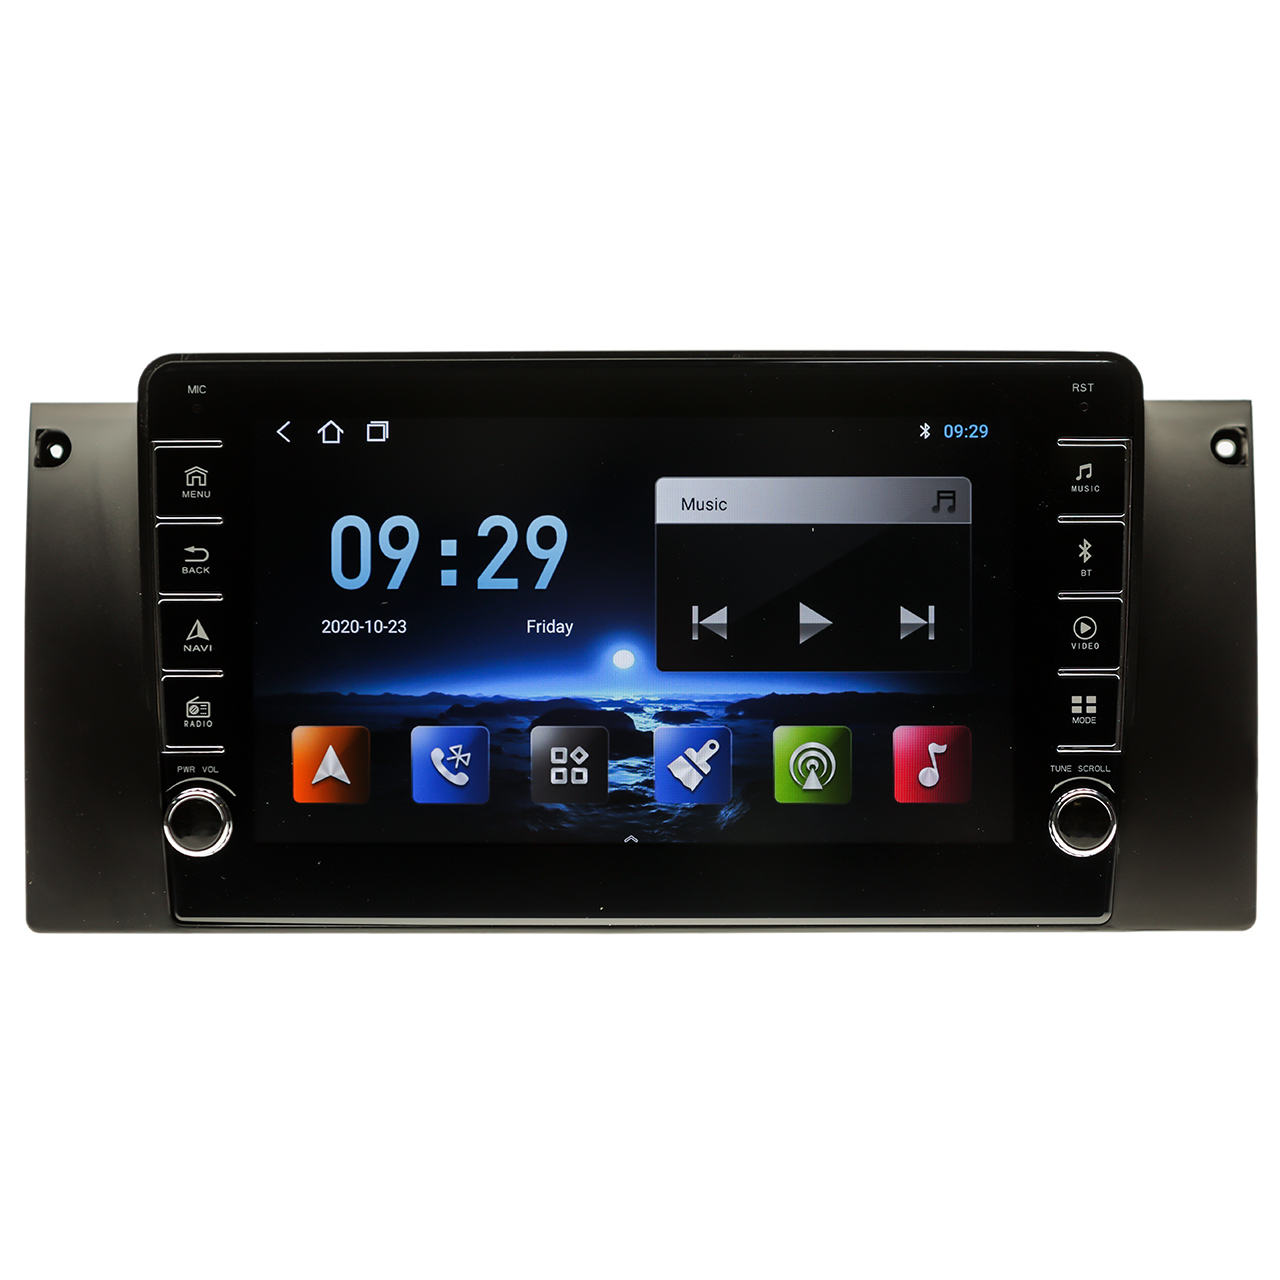 Navigatie AUTONAV ECO Android GPS Dedicata BMW E39, Model PRO Memorie 16GB Stocare, 1GB DDR3 RAM, Butoane Laterale Si Regulator Volum, Display 8